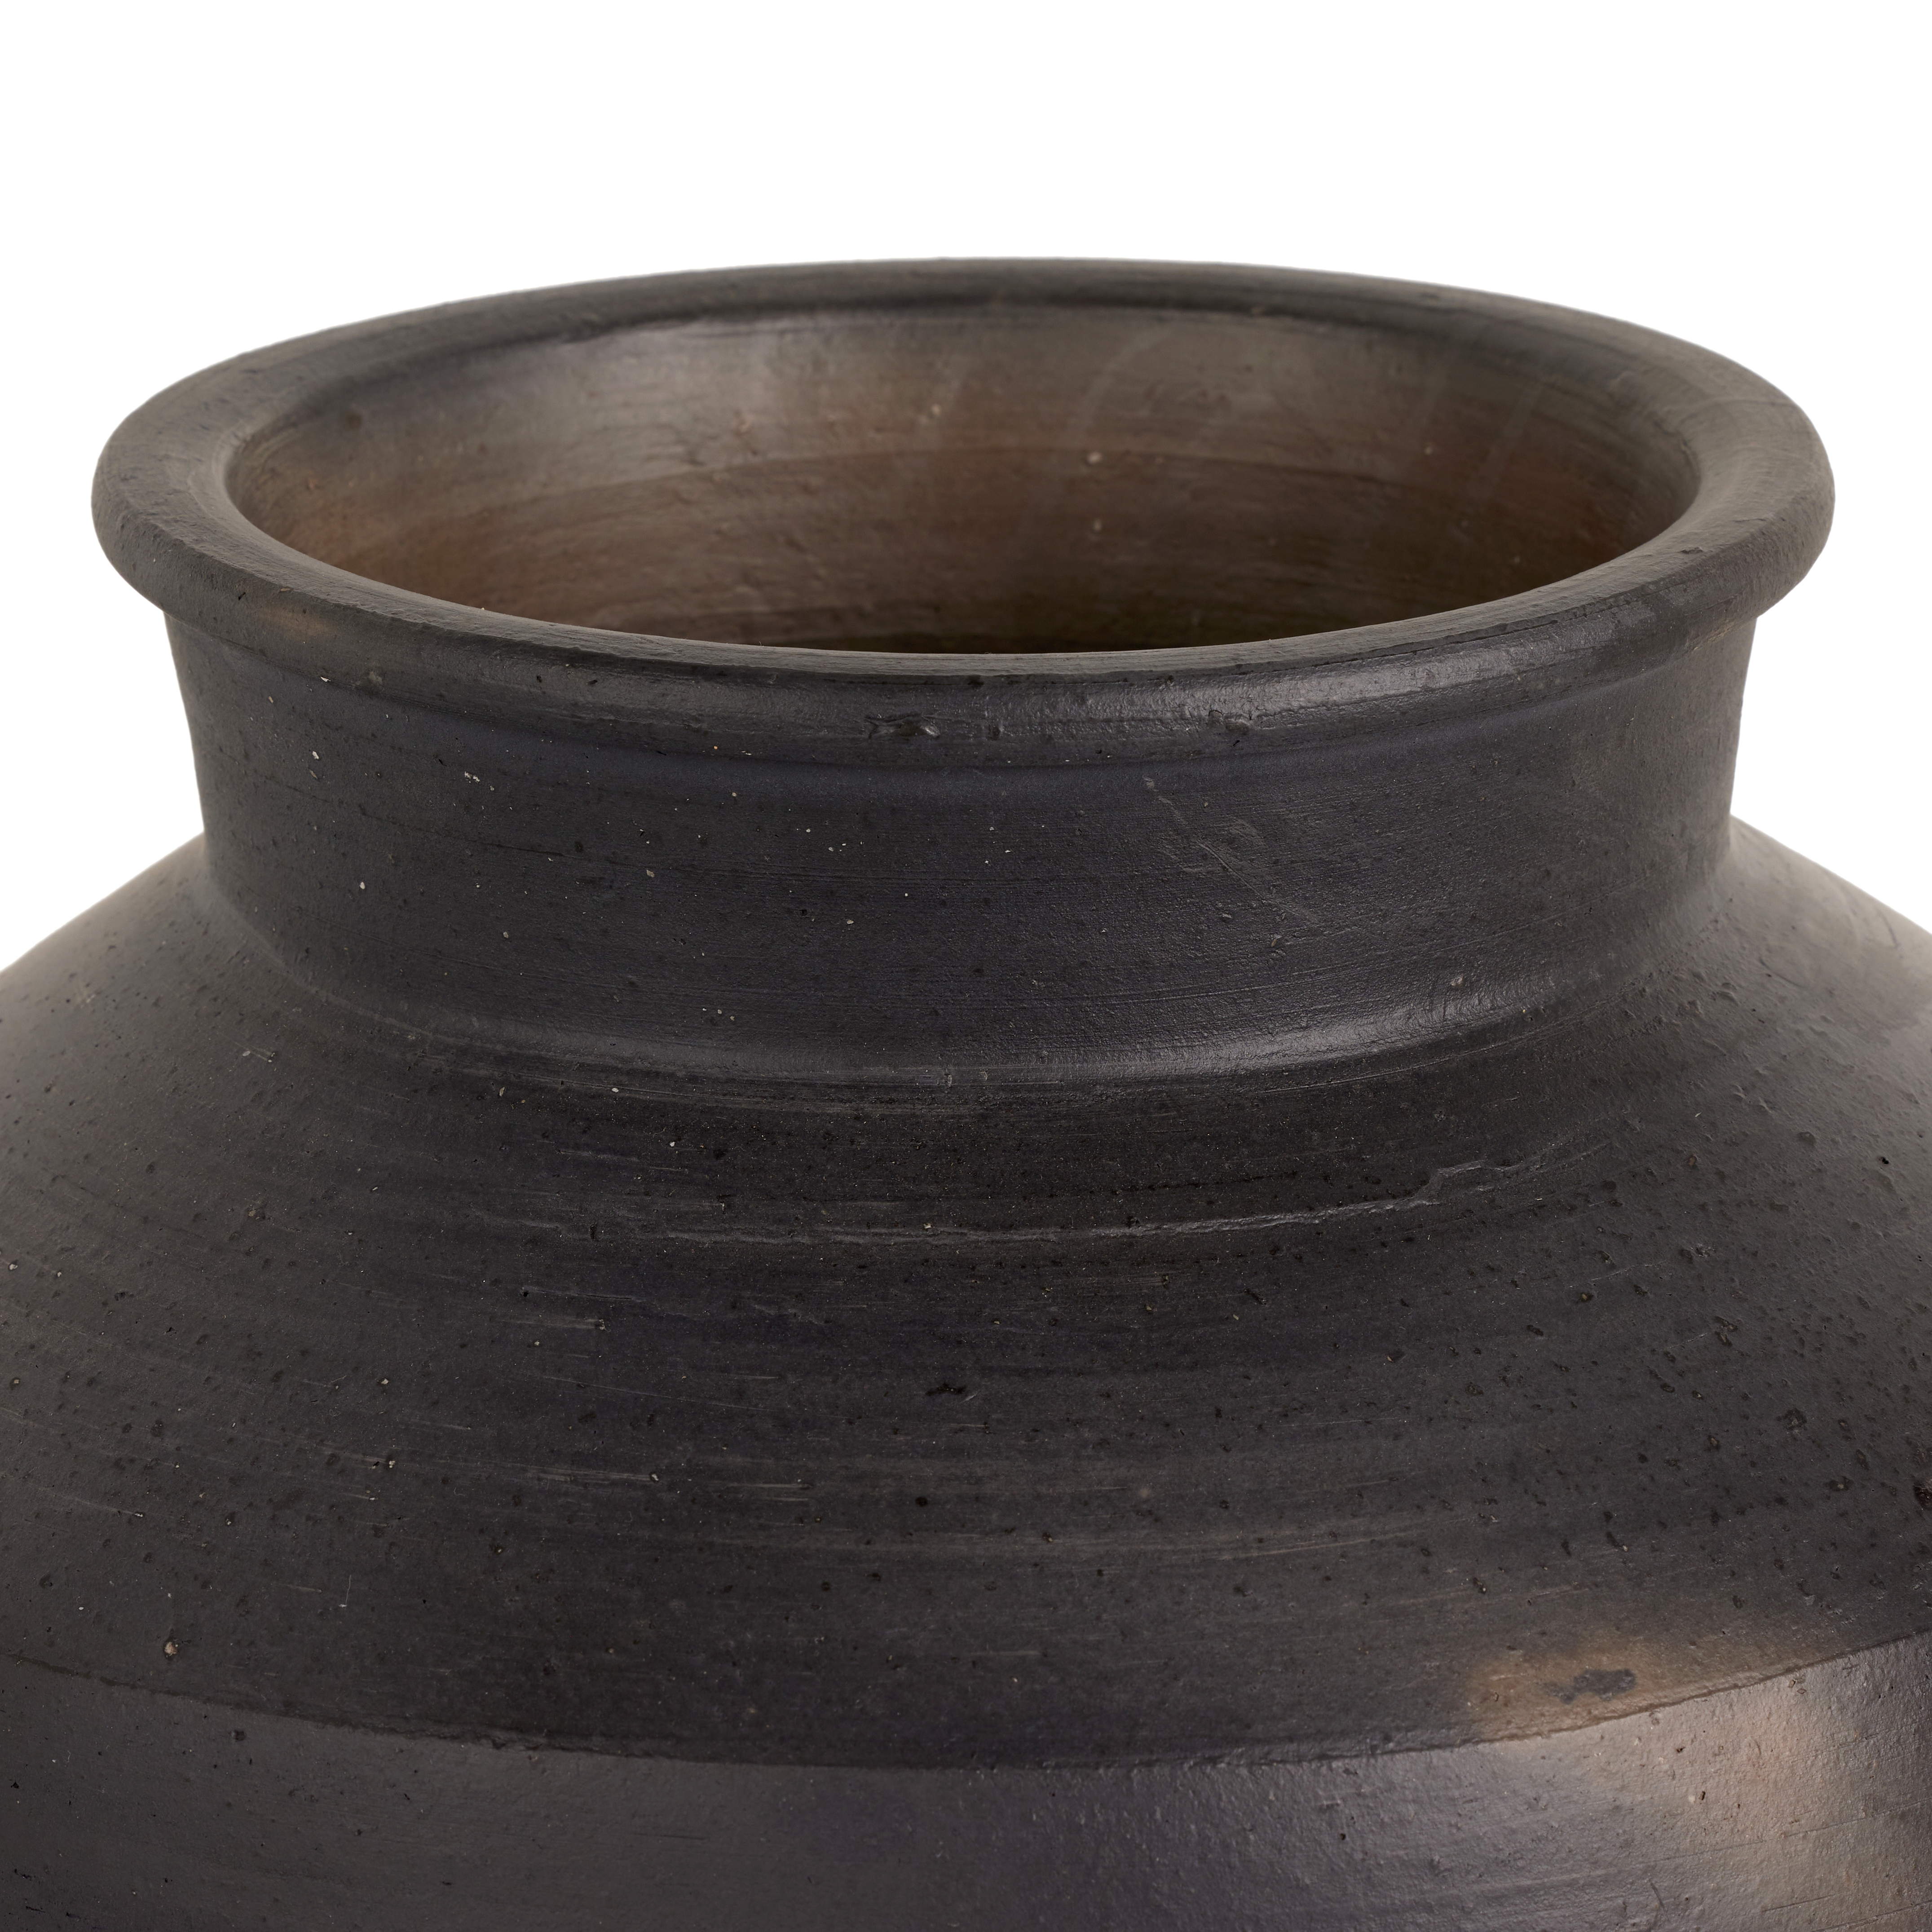 Kyland Vase-Aged Black Ceramic - Image 4